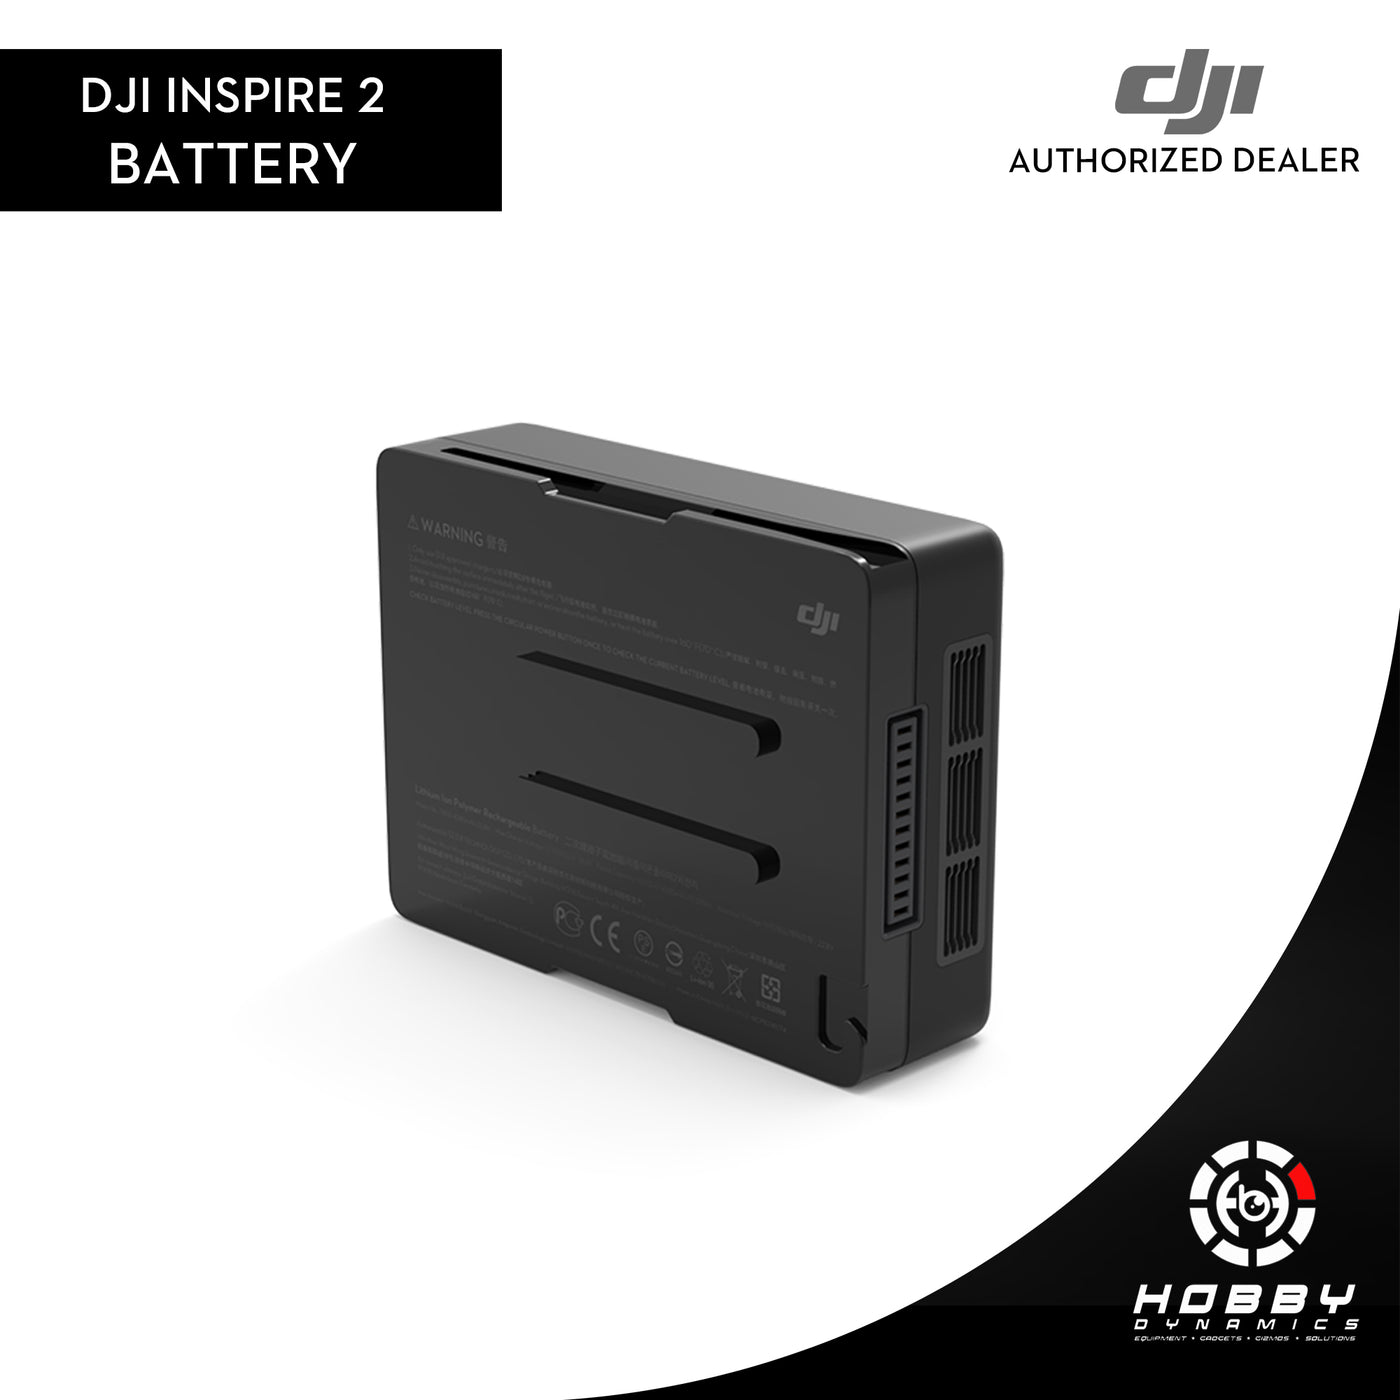 DJI Inspire 2 TB50 Intelligent Flight Battery